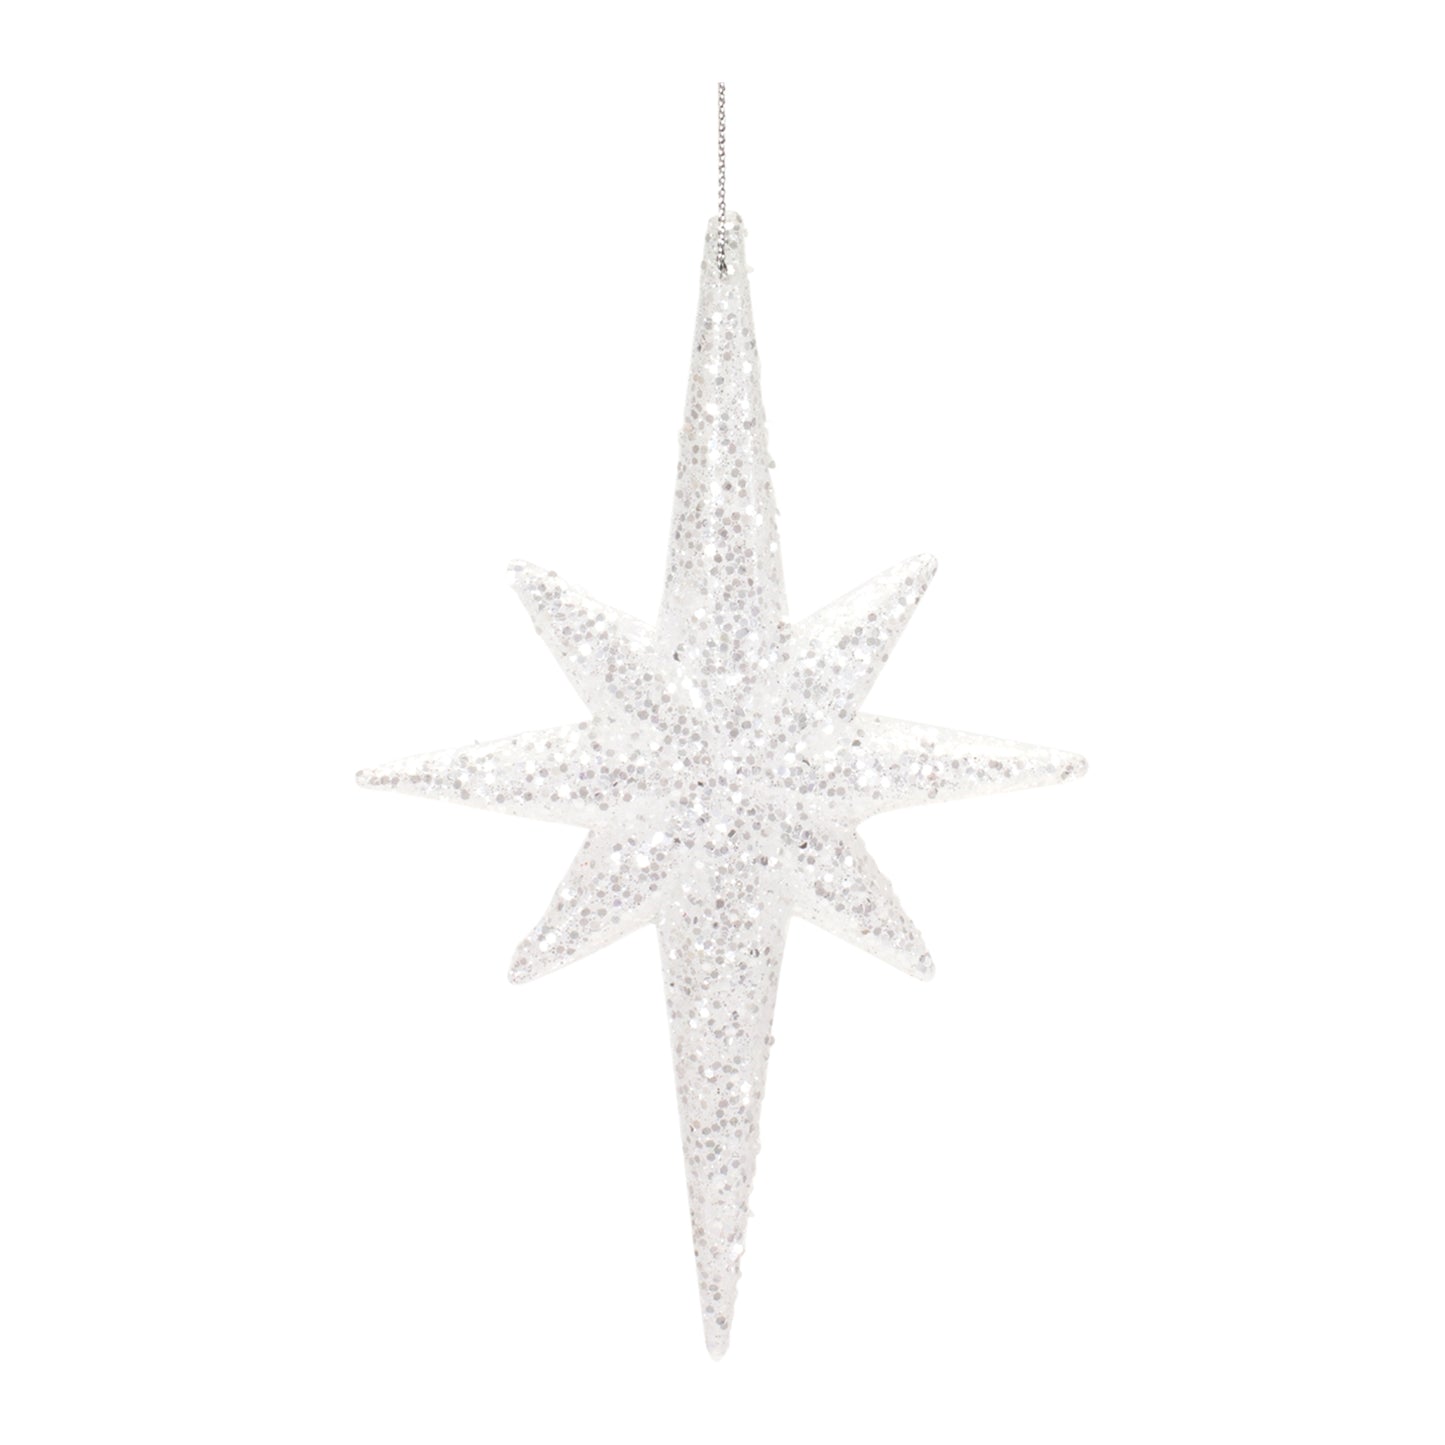 Clear Acrylic Star Drop Ornament (Set of 24)